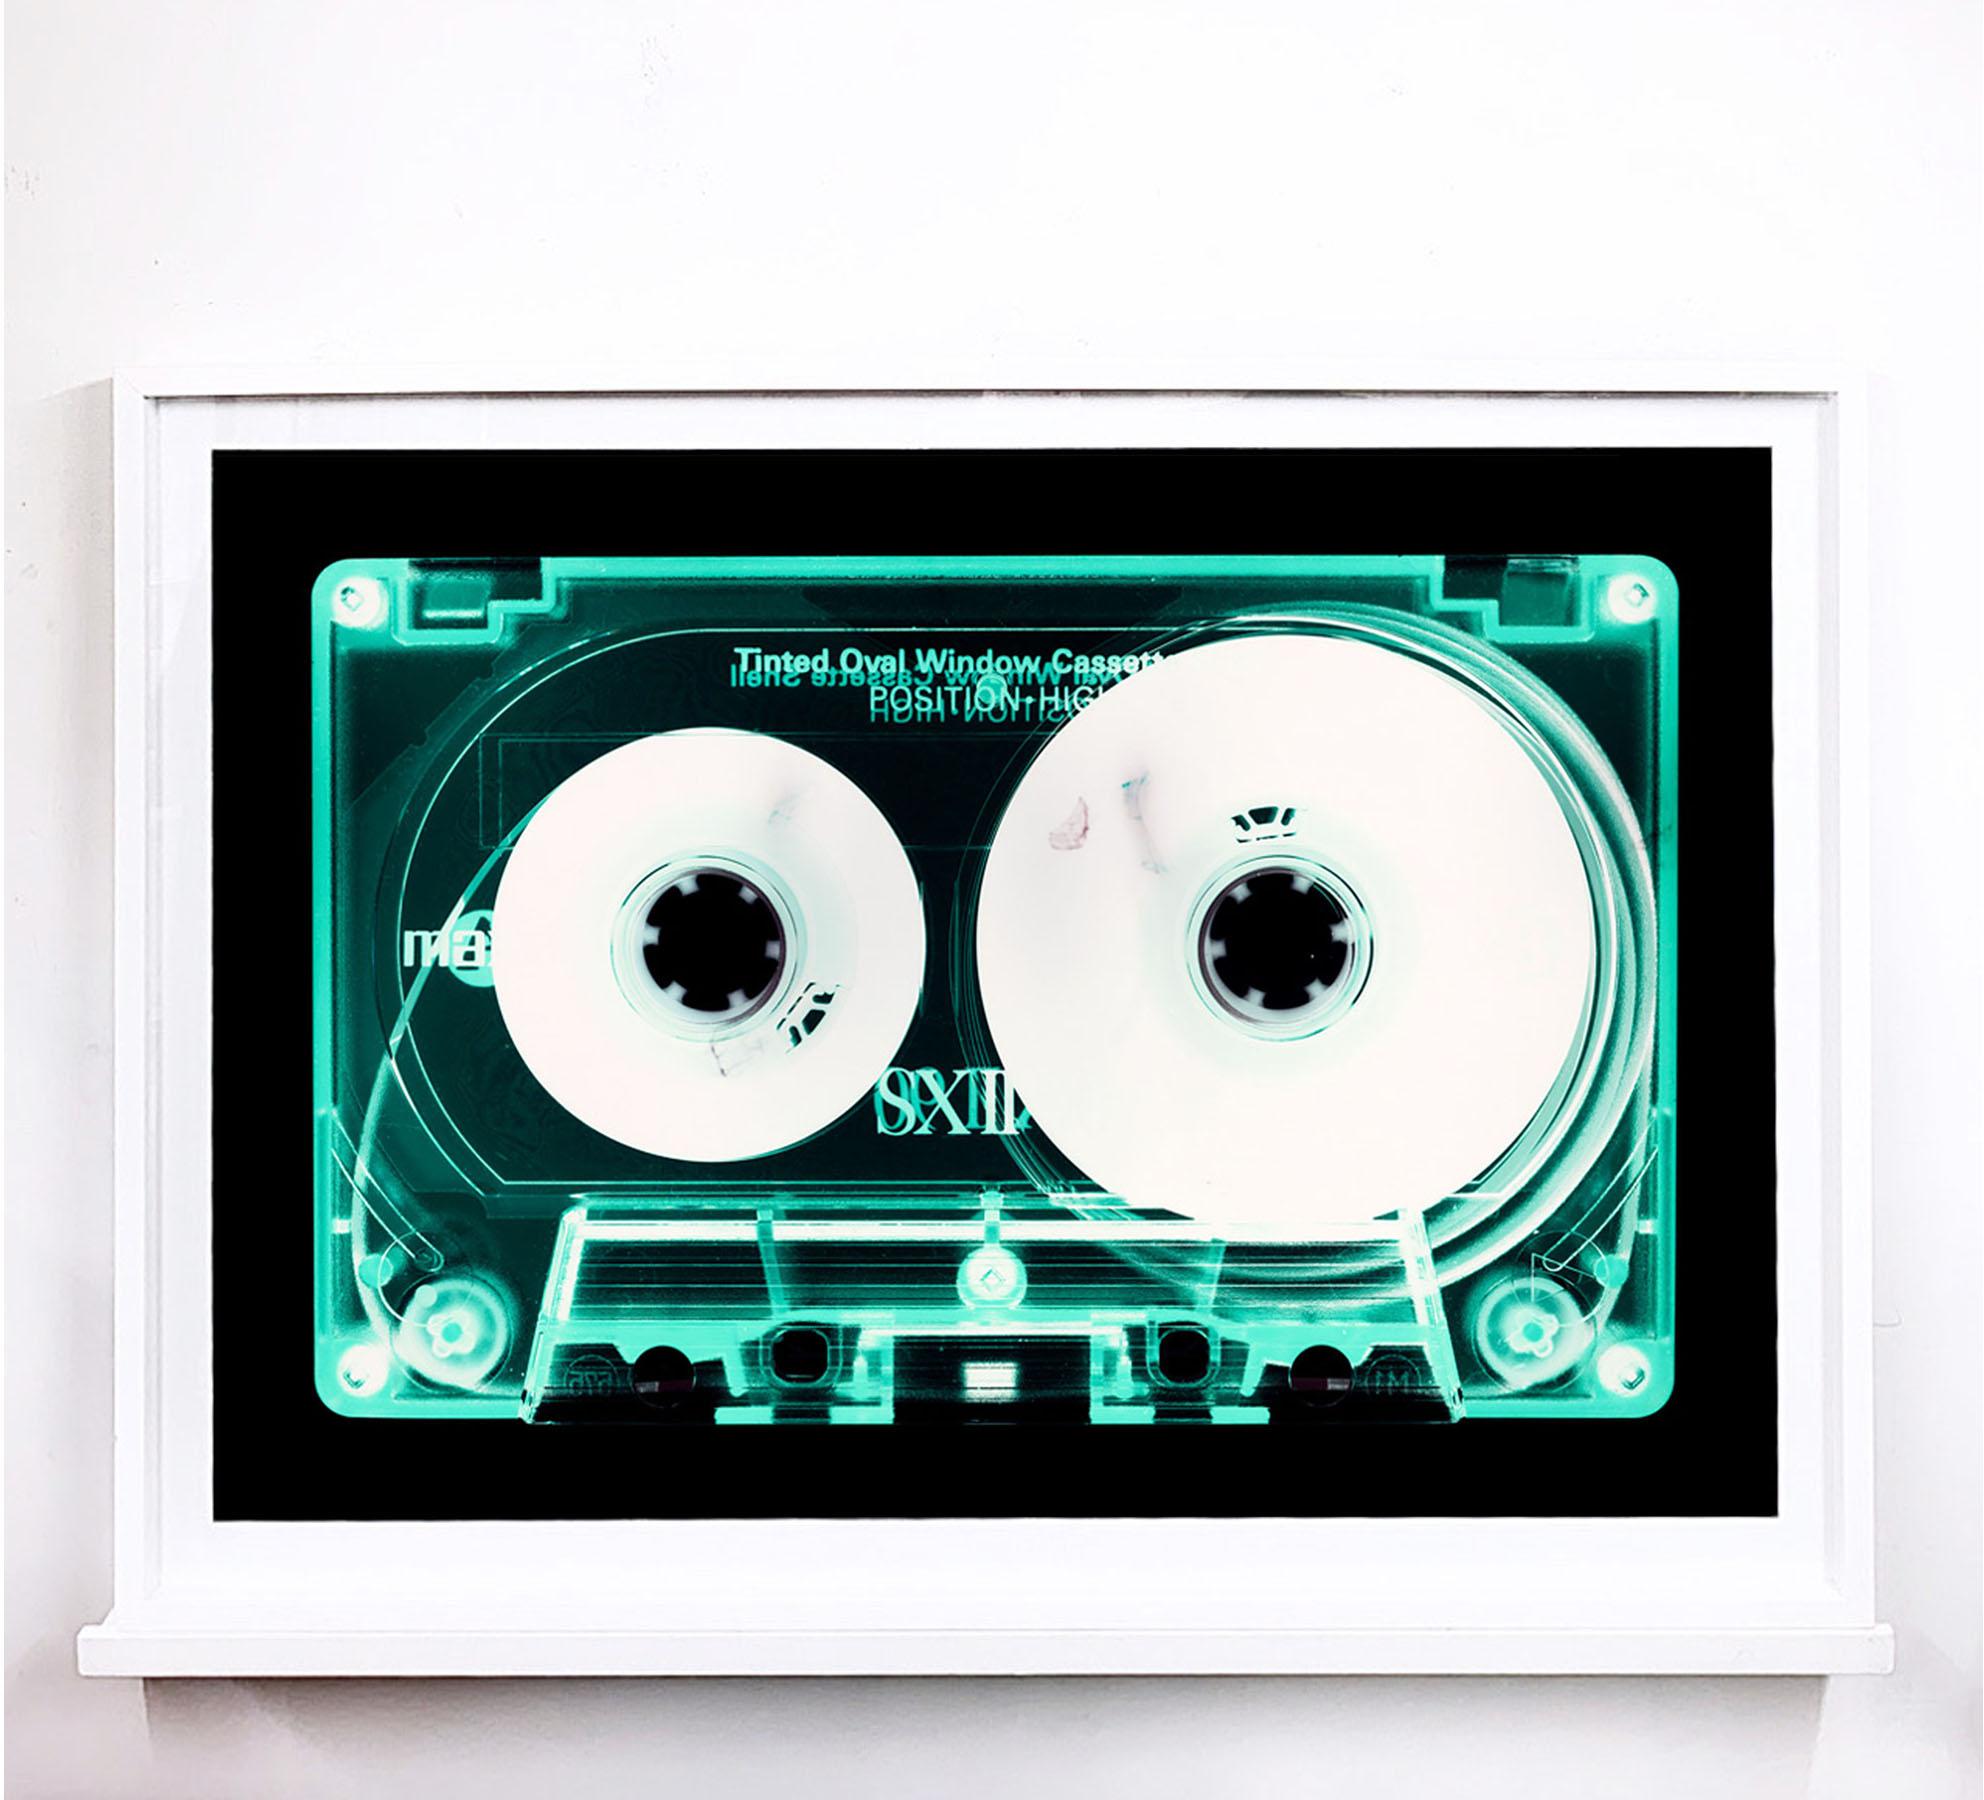 Tape-Kollektion - Mintfarbene, getönte Kassette - Konzeptionelle Farbe Musik Pop Art (Pop-Art), Print, von Heidler & Heeps